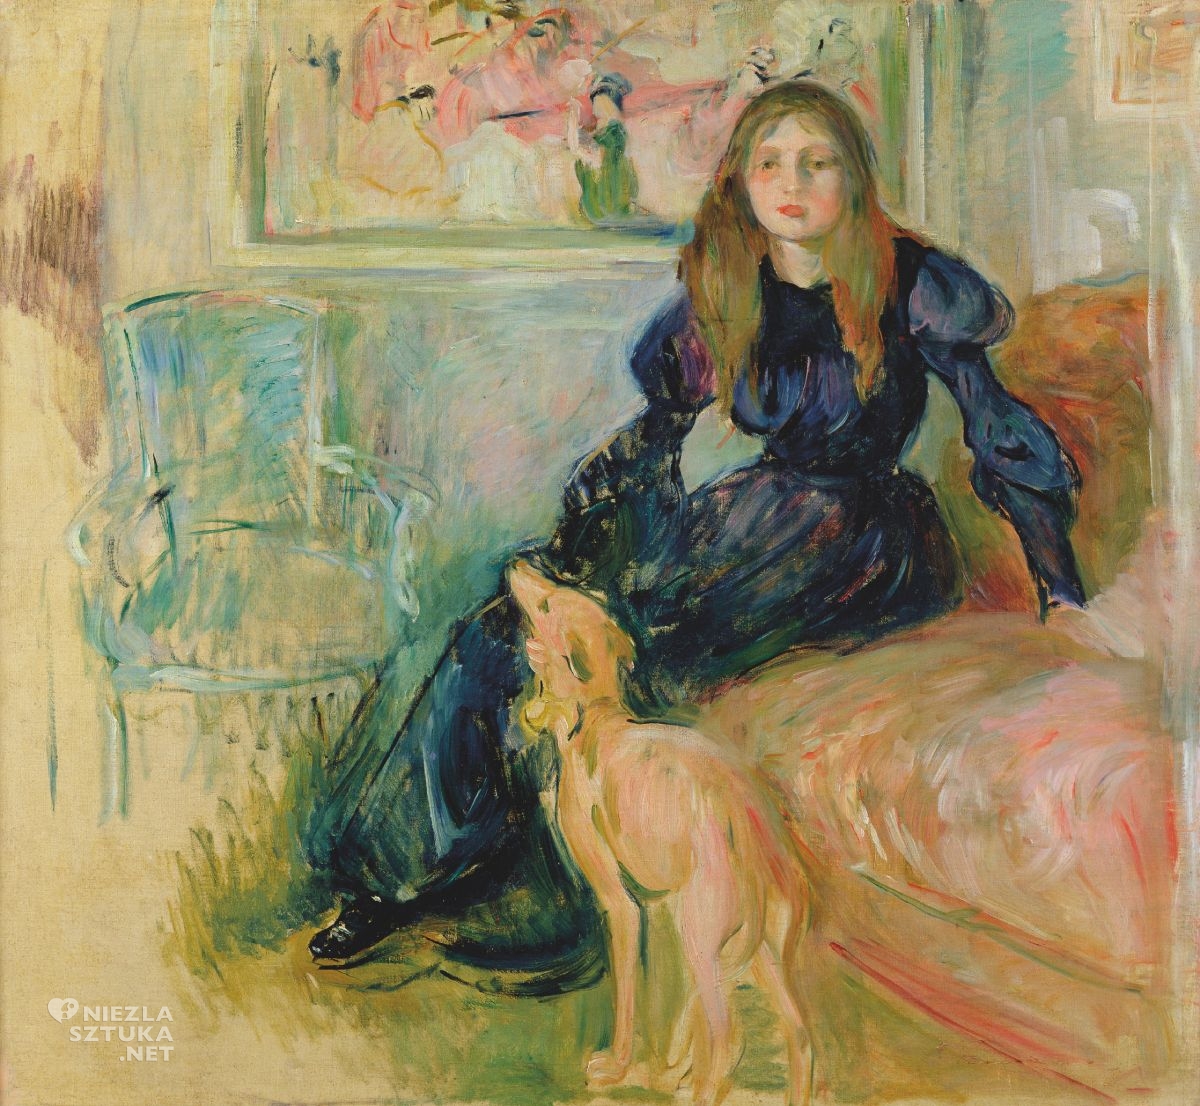 Berthe-Morisot, Julie Manet and her Greyhound Laerte, Julie Manet z jej chartem angielskim Laerte, Paryż, kobiety w sztuce, akwarela, niezła sztuka